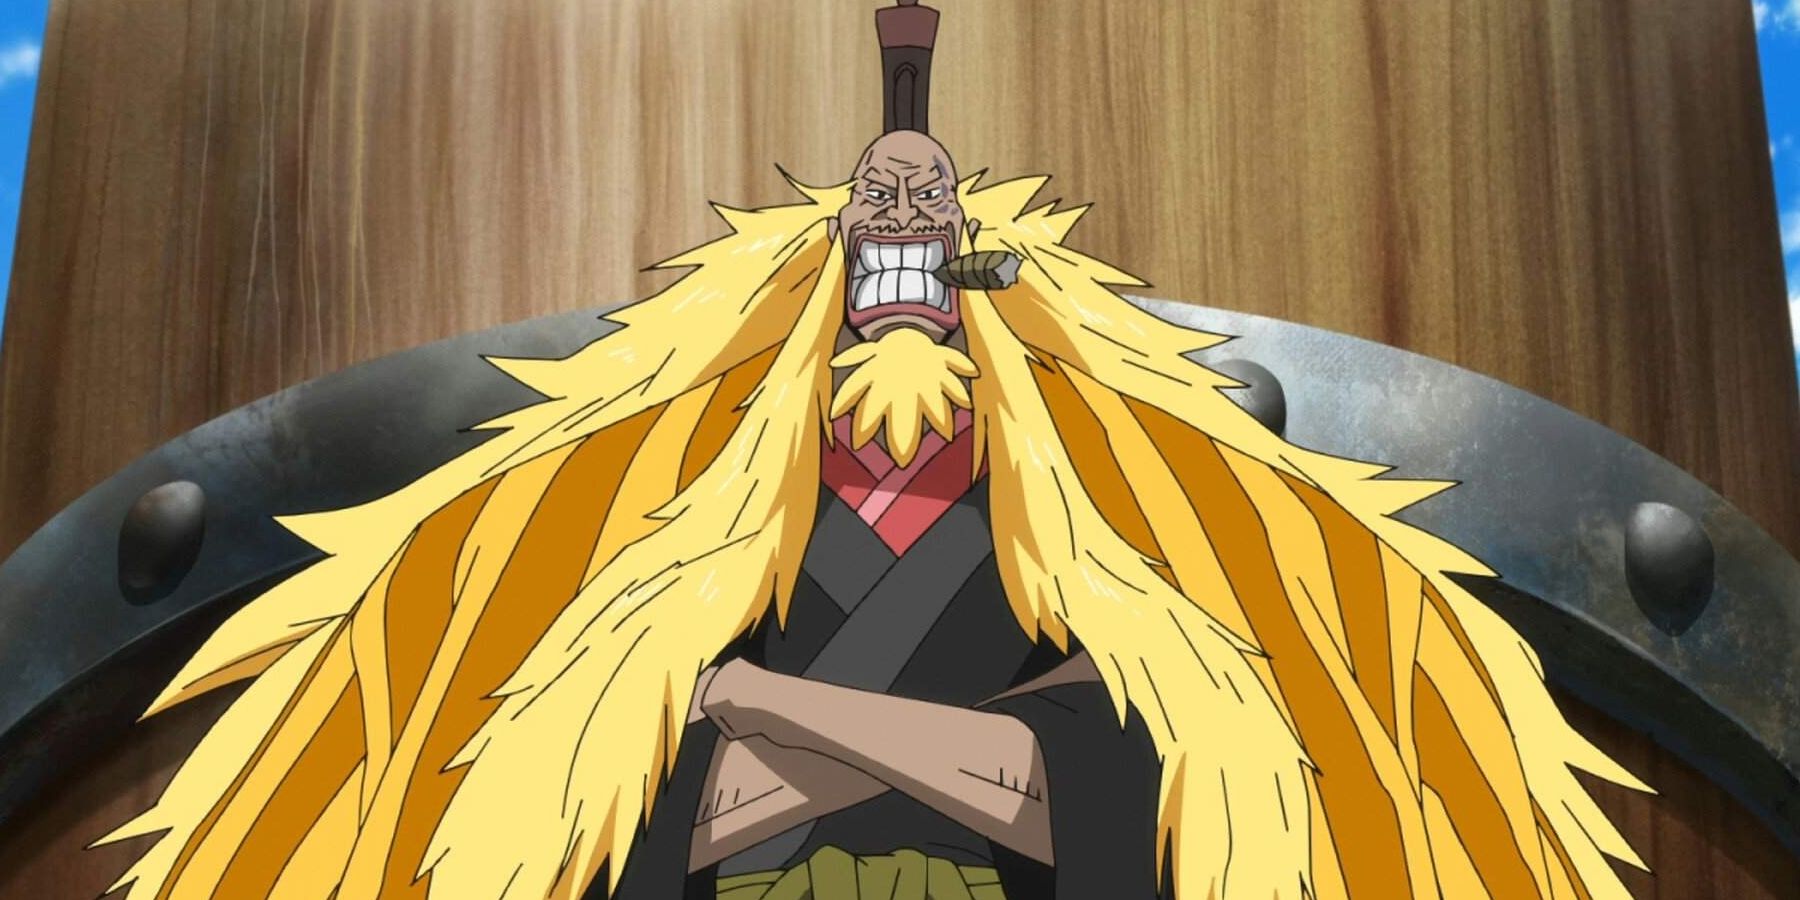 Shiki, captain of the Golden Lion Pirates